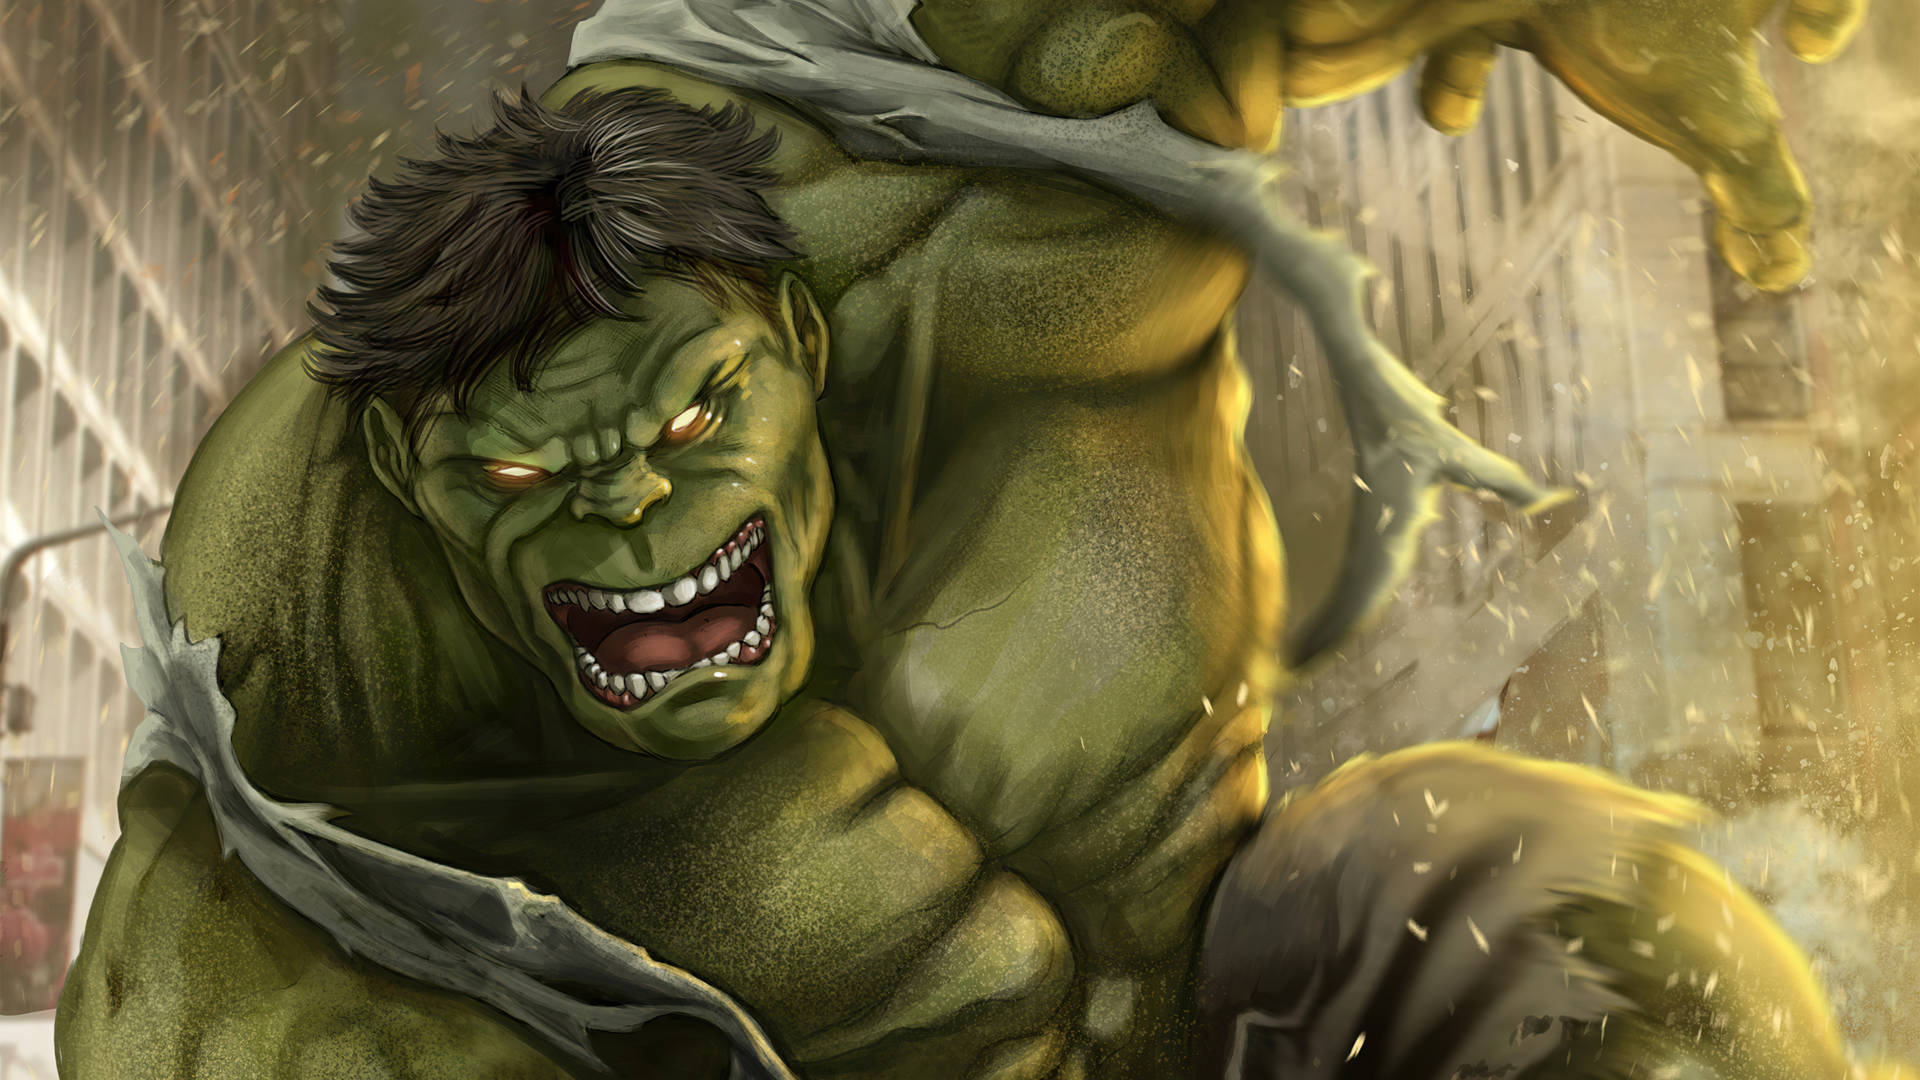 Incredible Hulk In 4k Quality